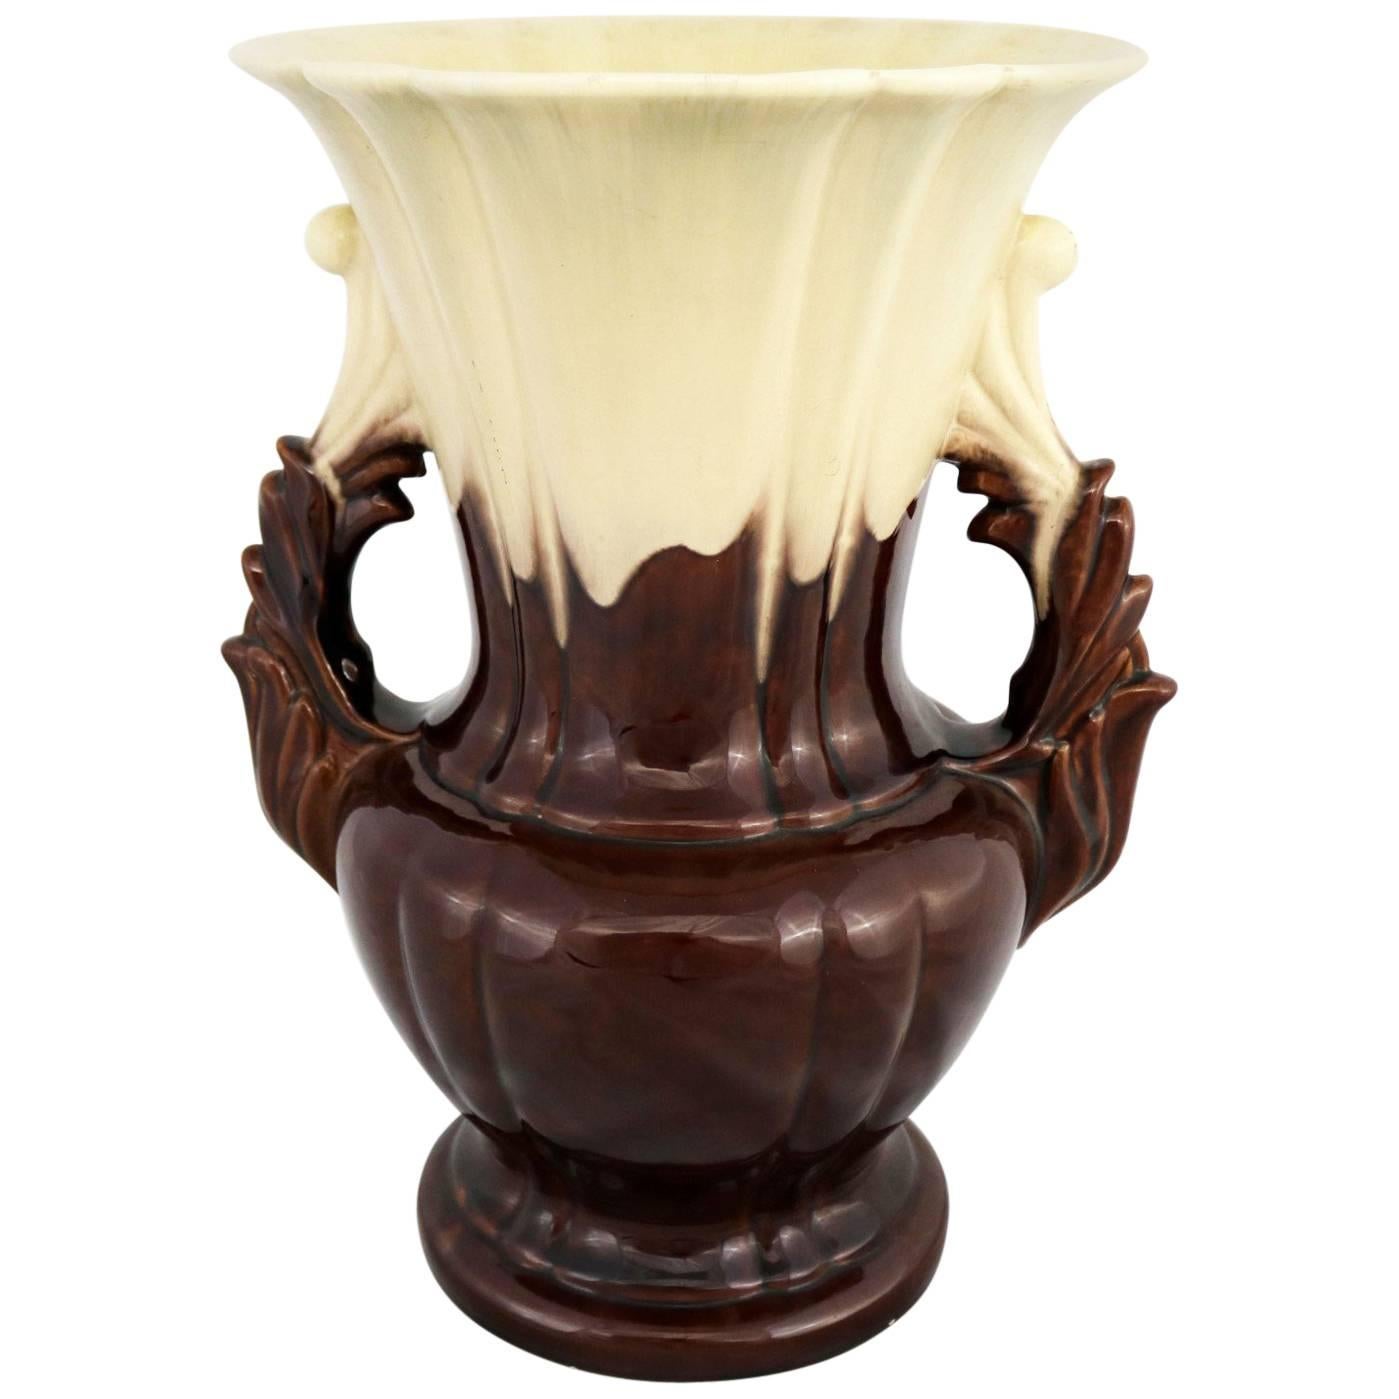 S and G Keramik Monumental Classic Style German Ceramic Floor Vase For Sale